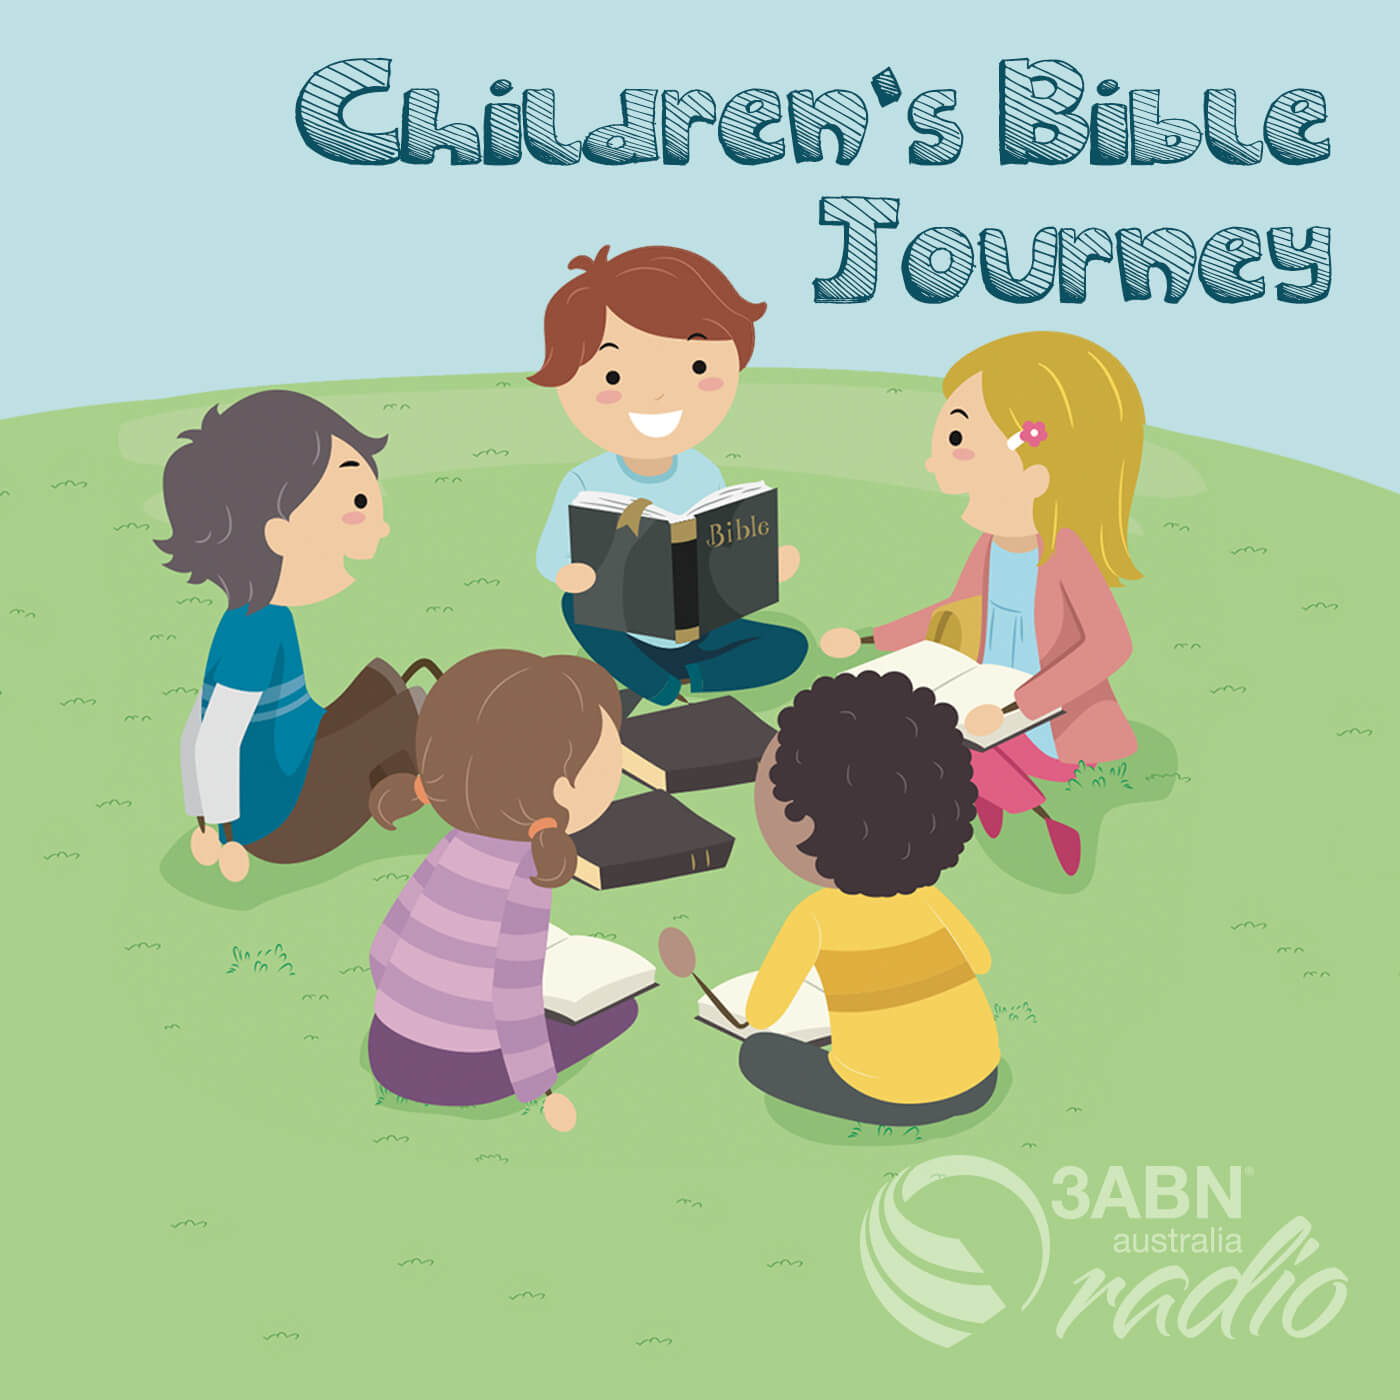 Children's Bible Journey - 2133